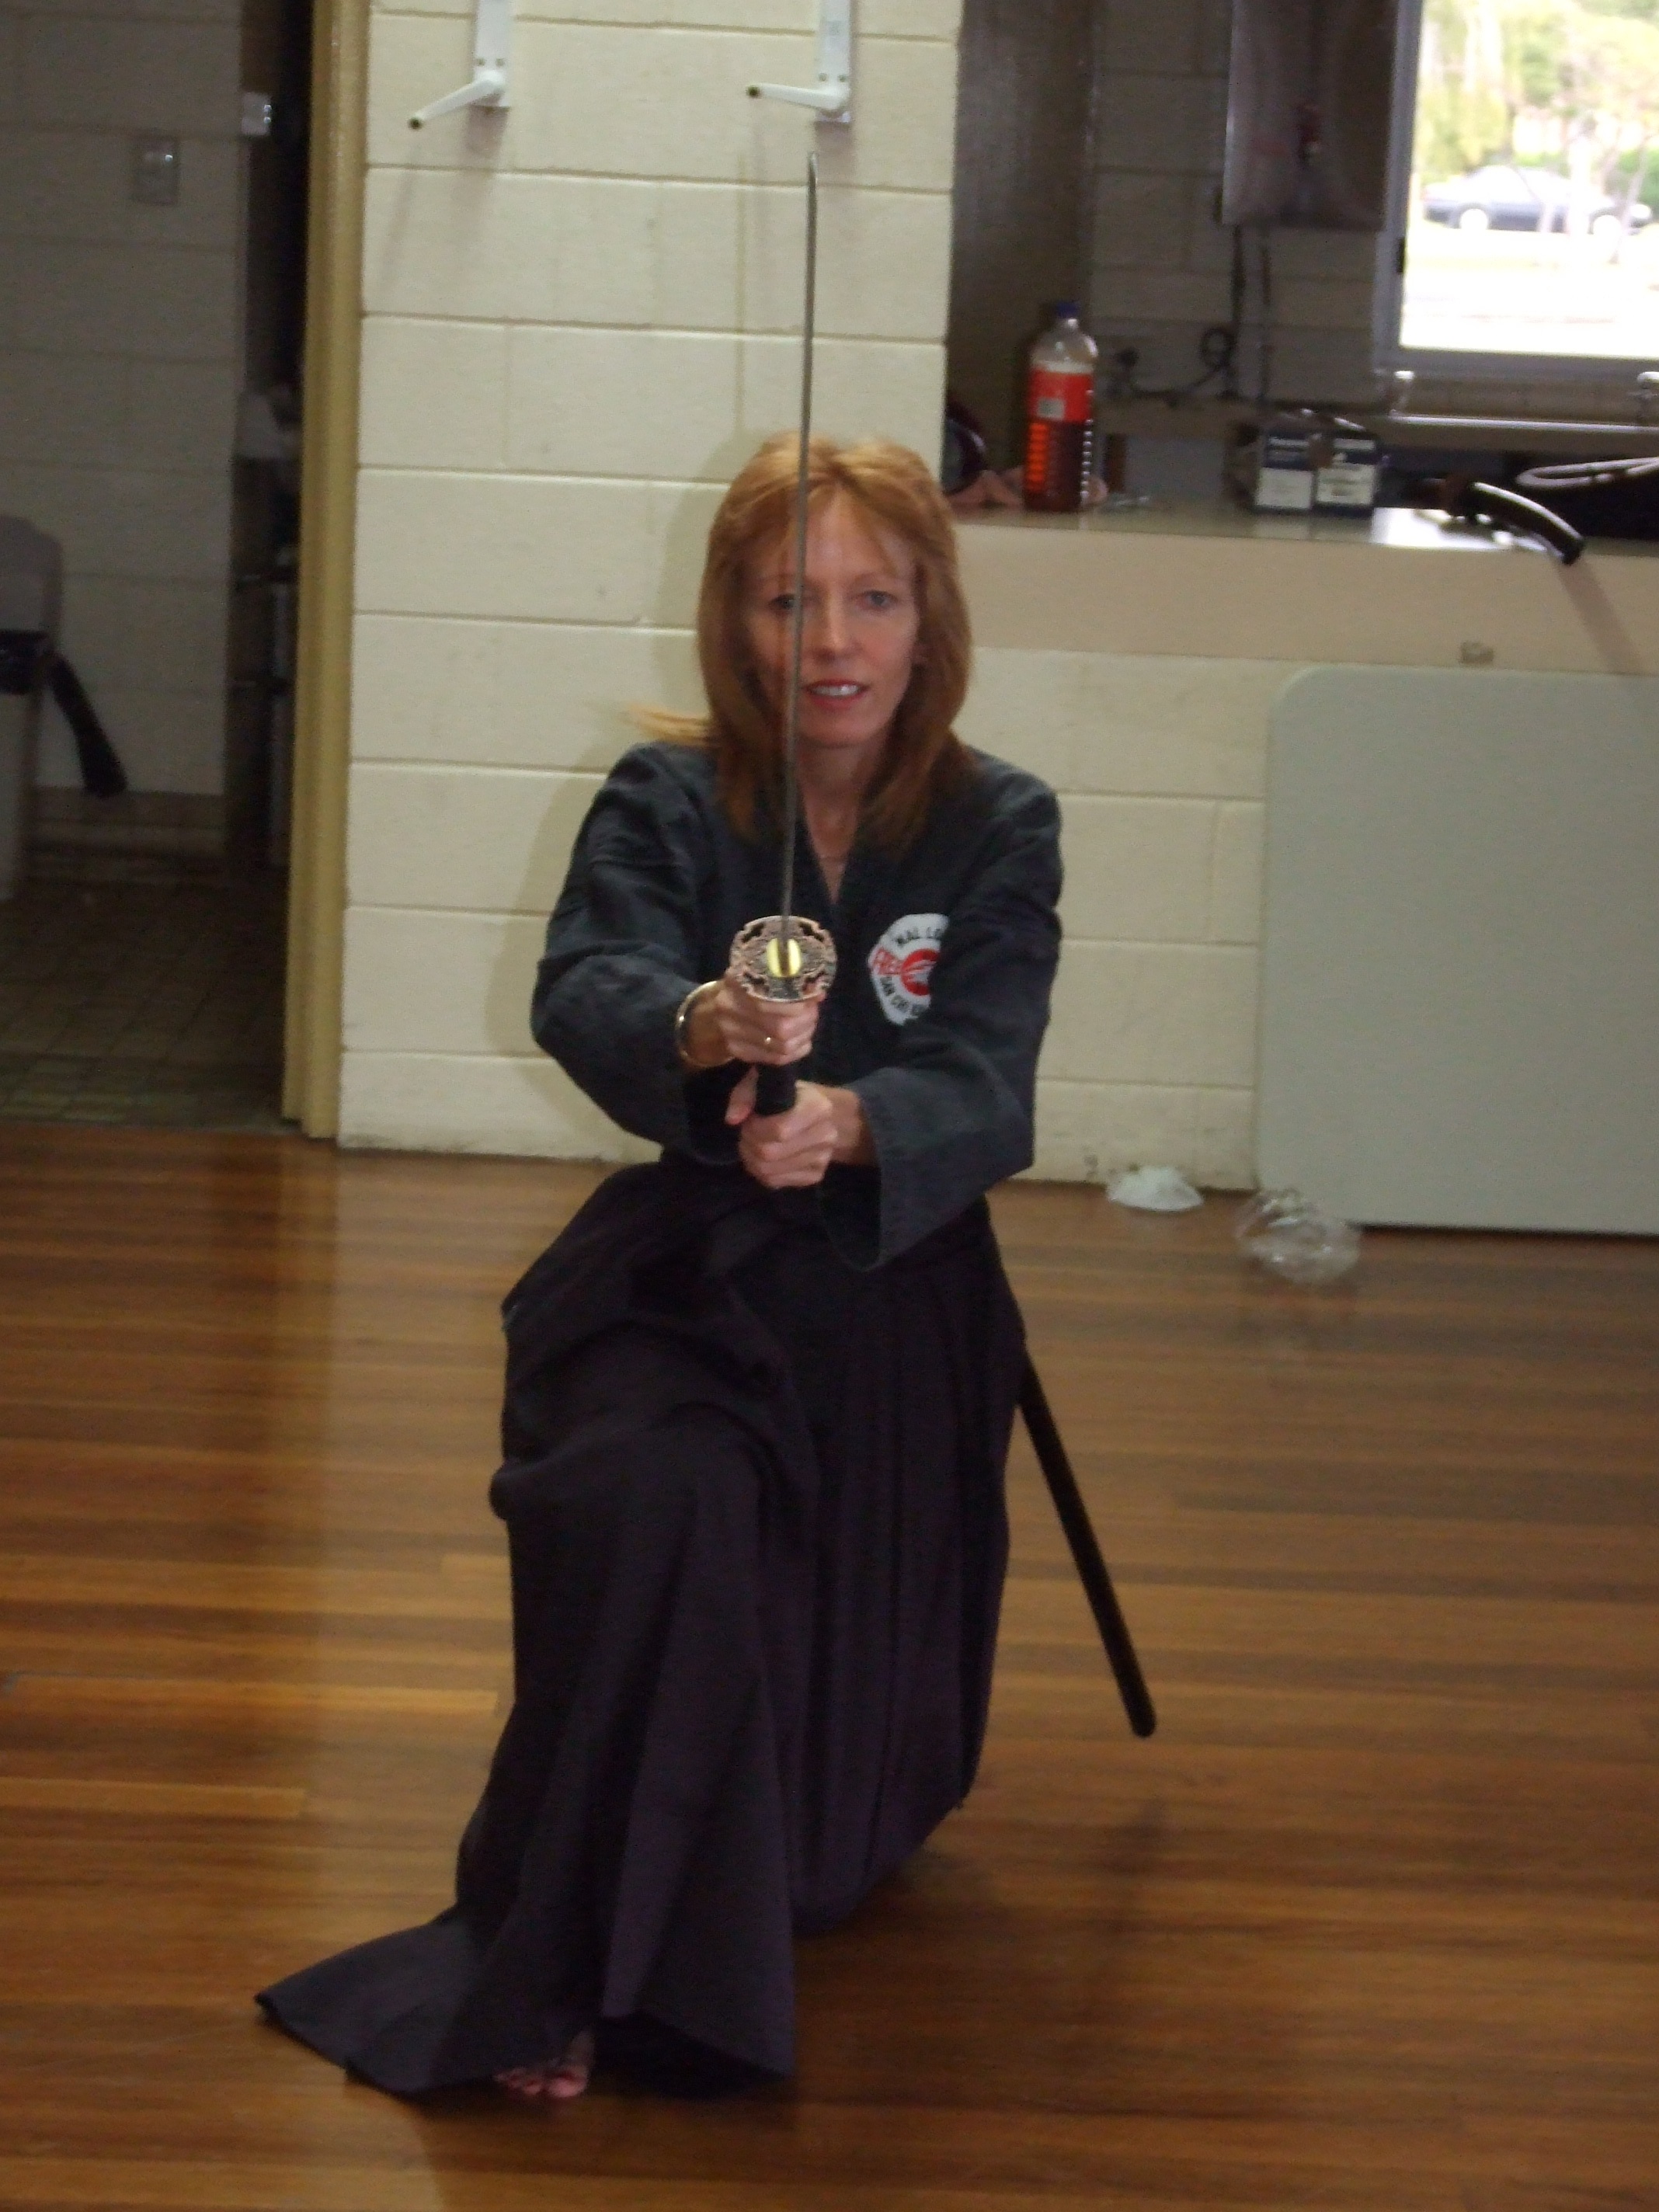 Karen demonstrating sword